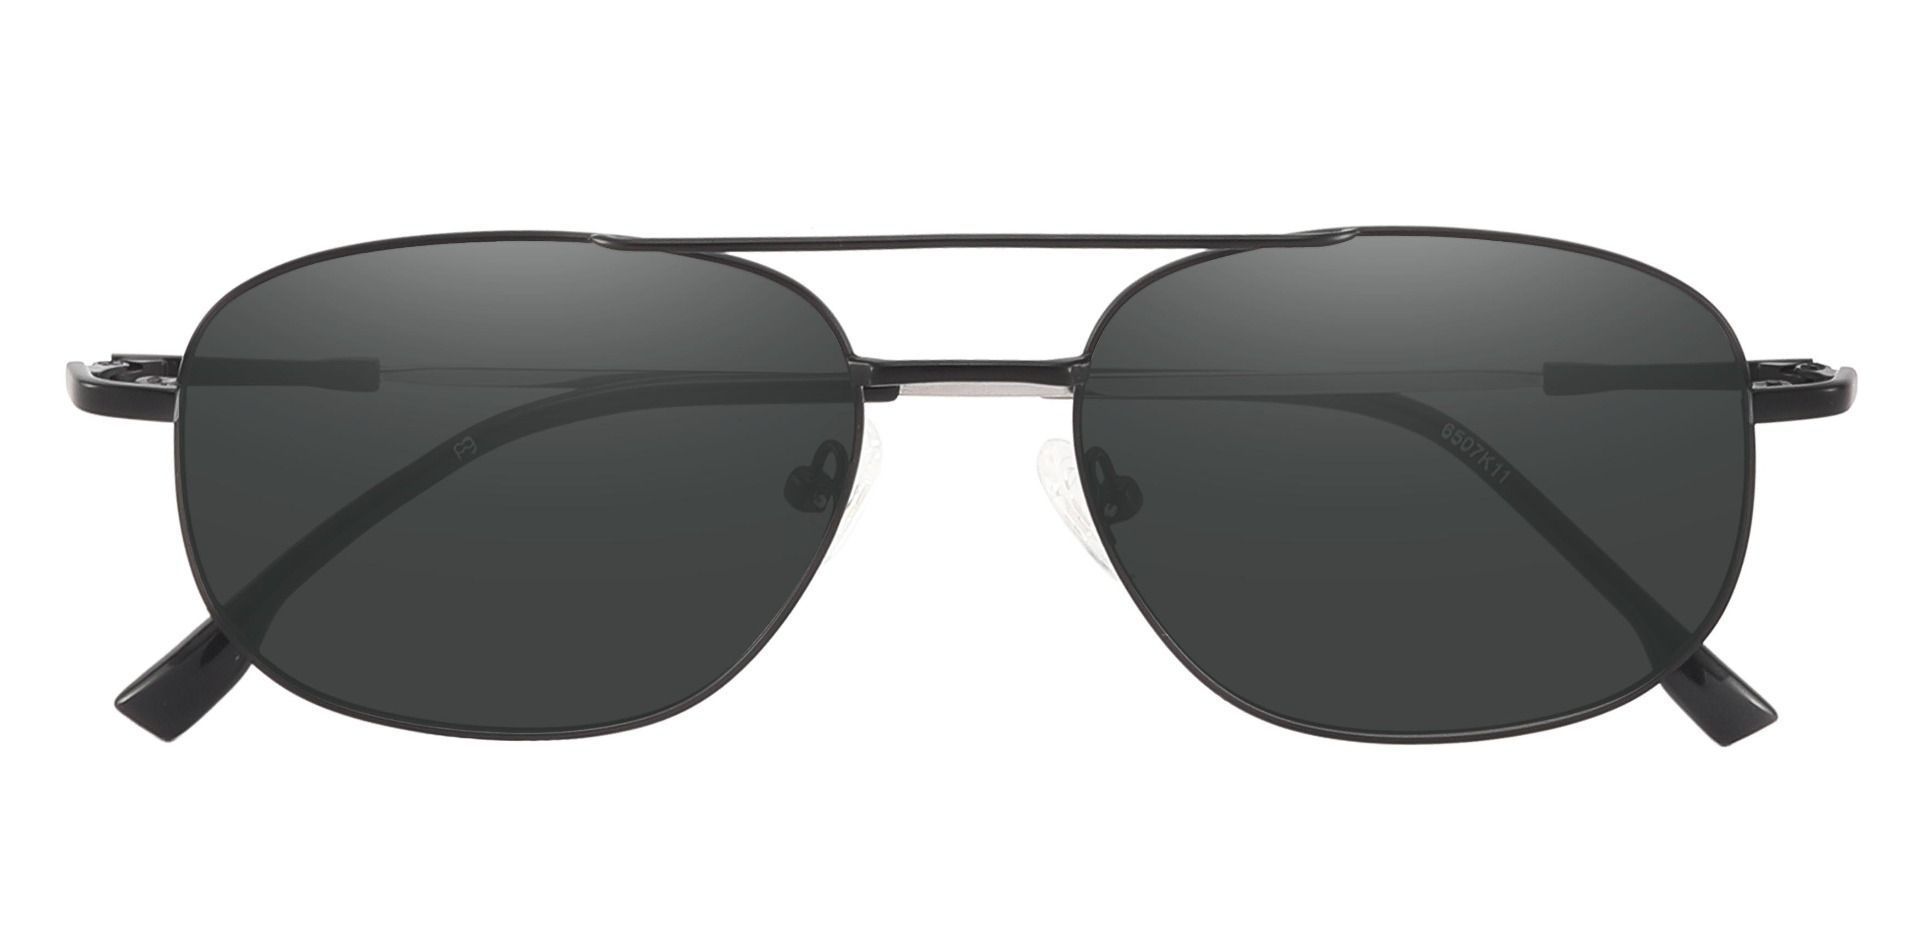 Jamison Aviator Prescription Sunglasses - Black Frame With Gray Lenses